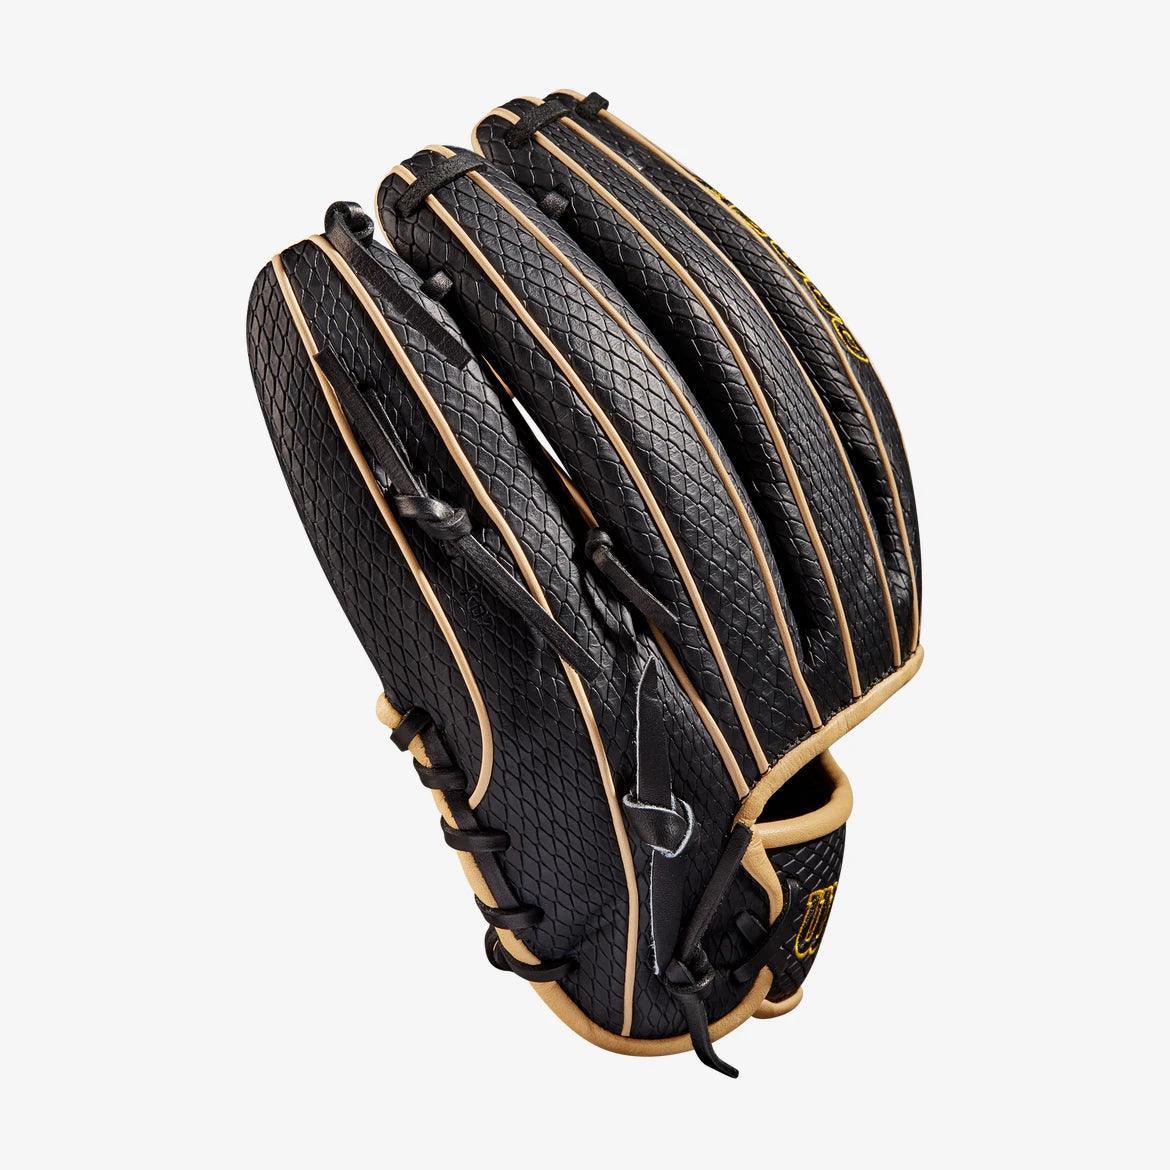 Wilson A2000 KBH13 11.75" Black Infield Baseball Glove - CustomBallgloves.com